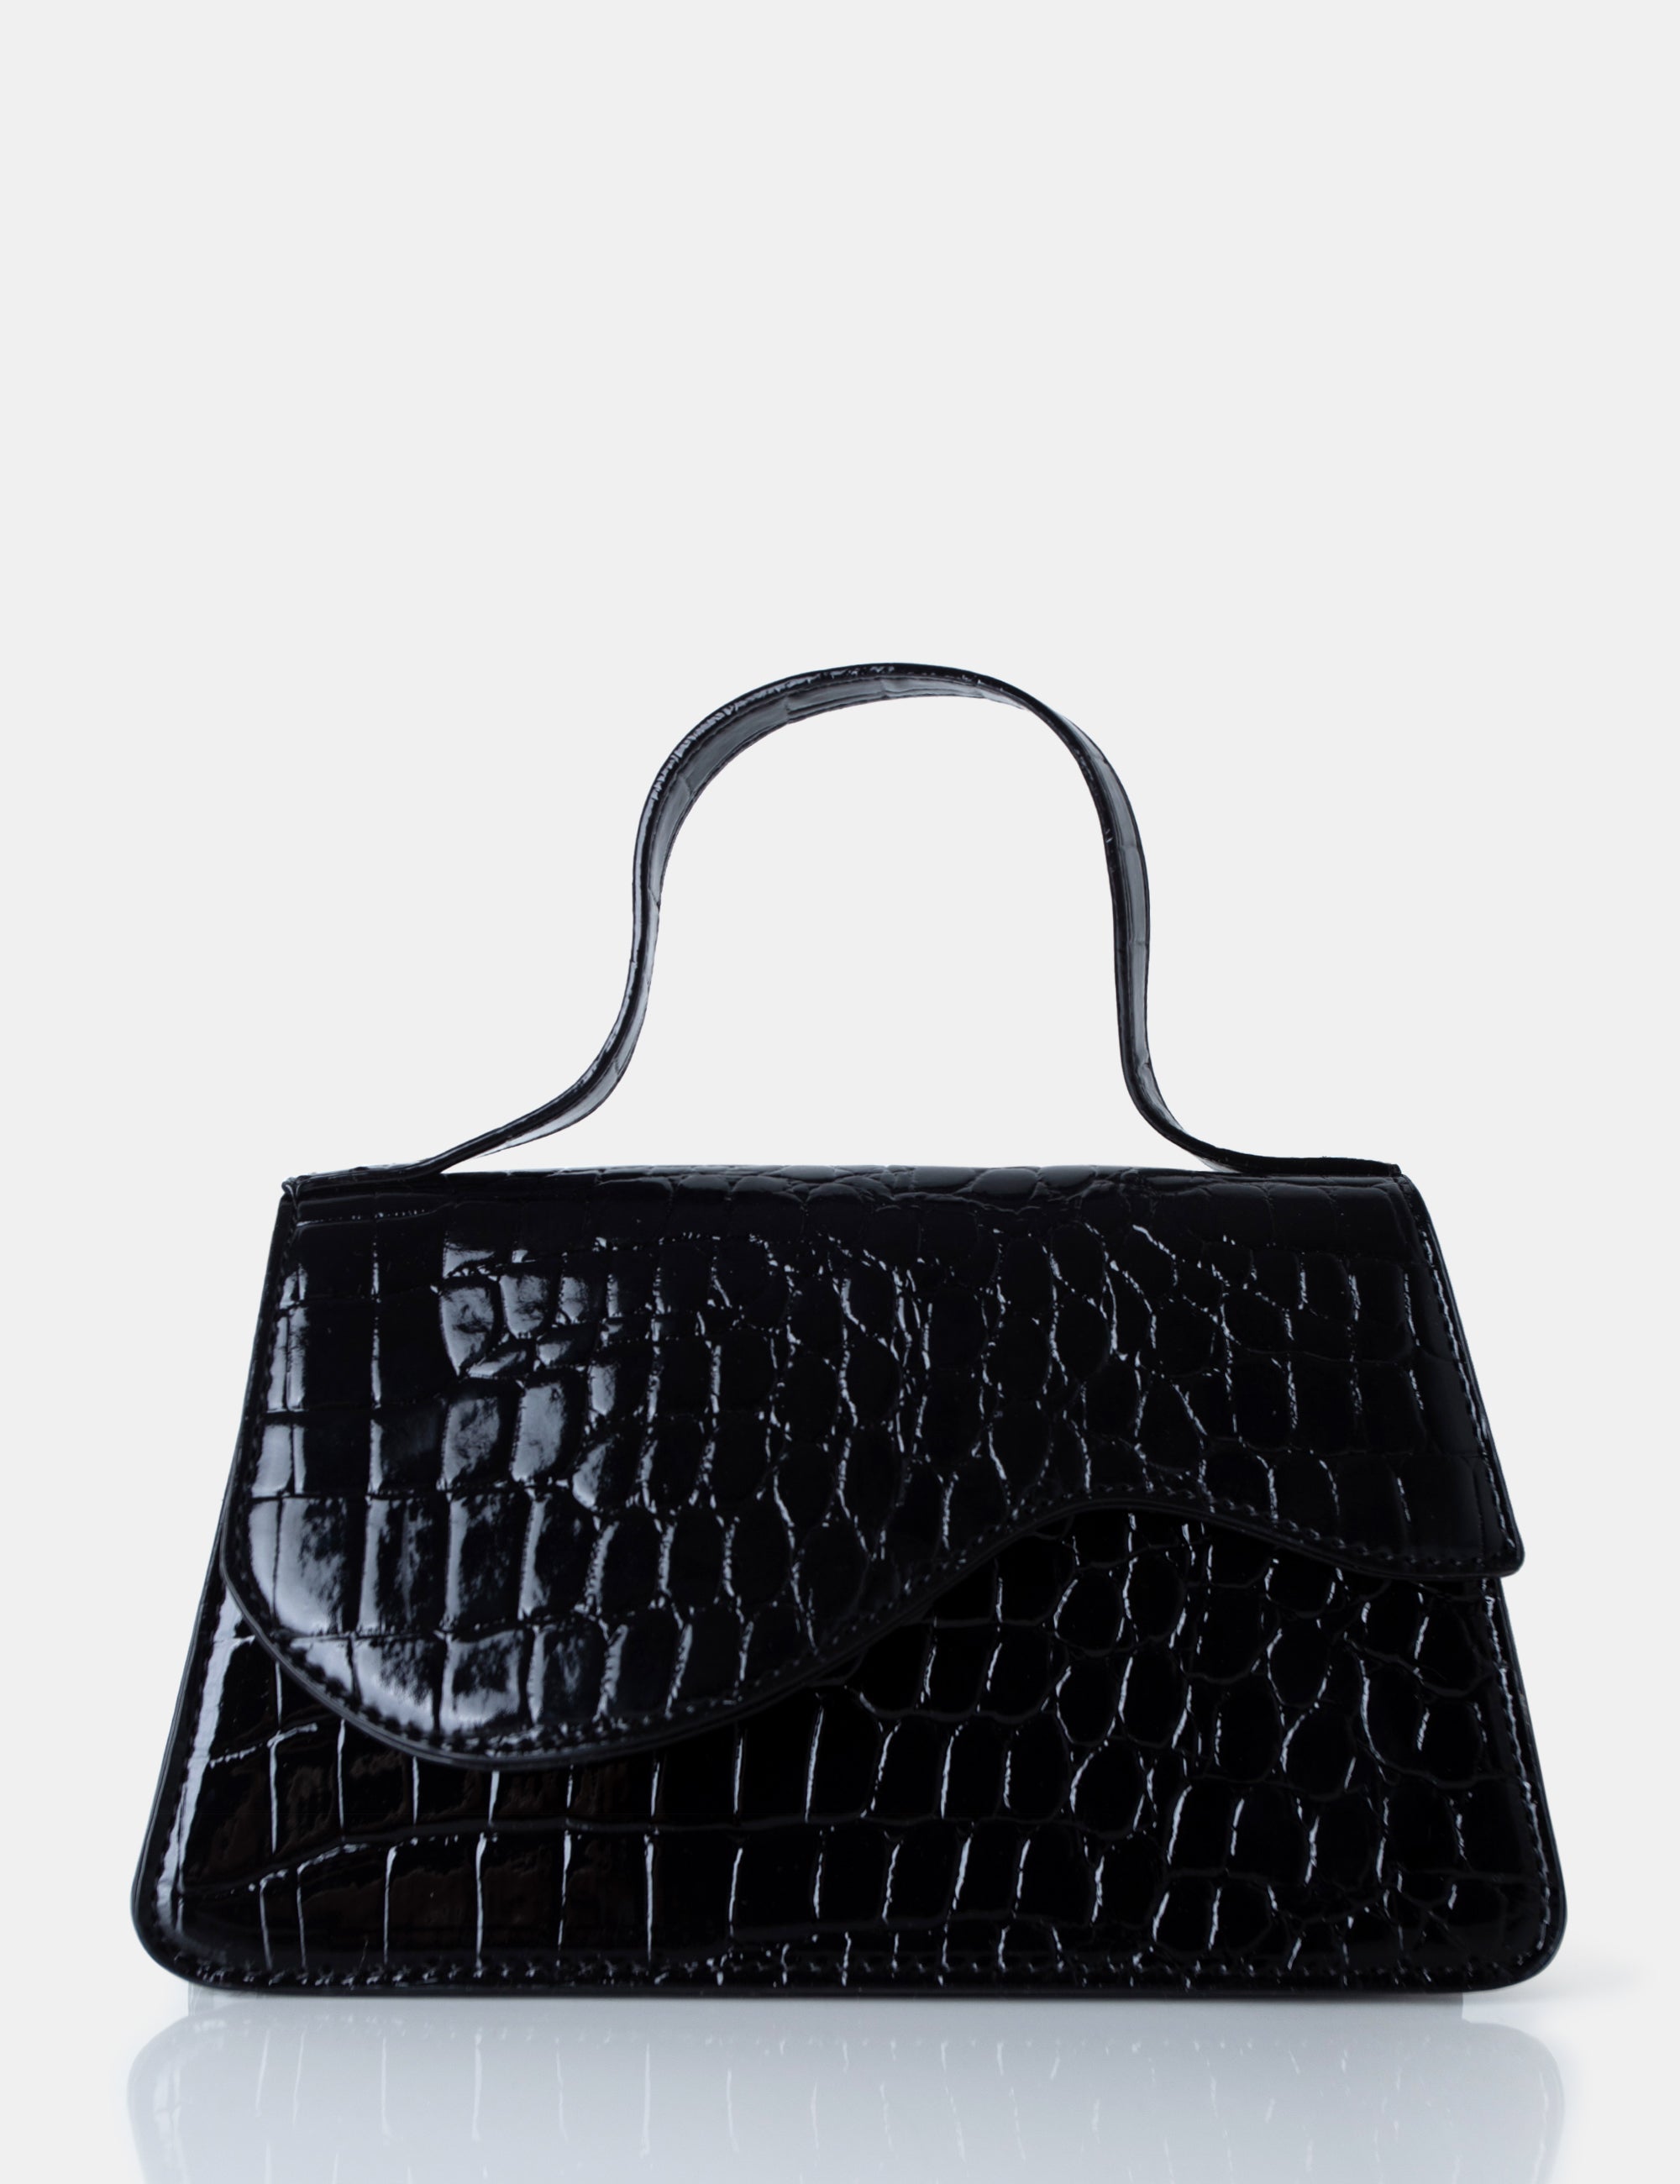 The Polly Black Croc Top Handle Mini Bag product